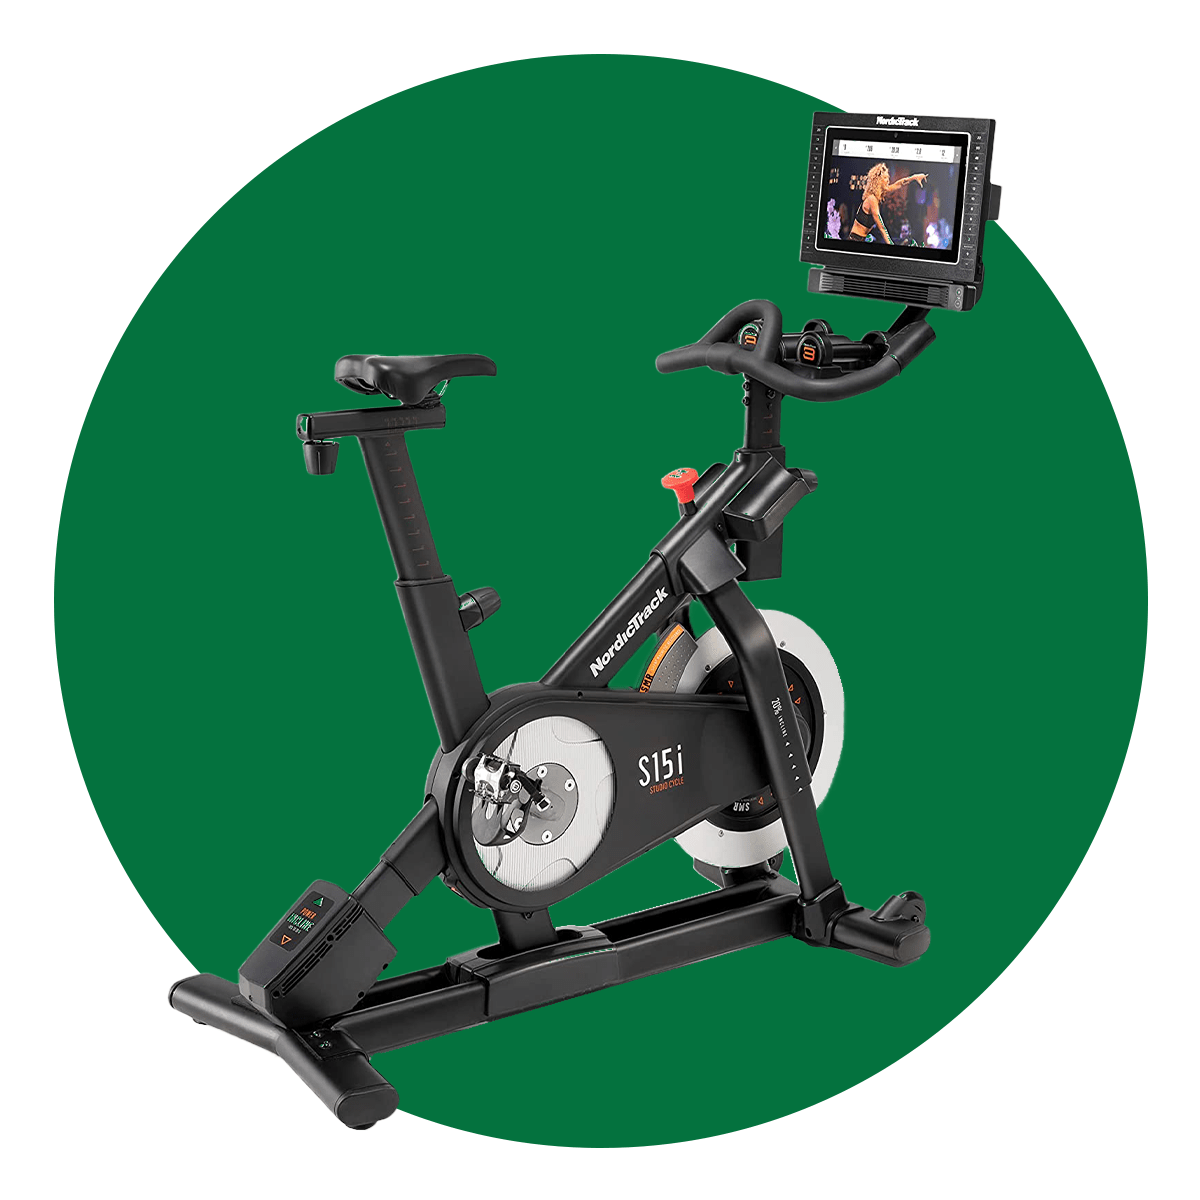 Nordictrack Commercial Studio Cycle Ecomm Via Amazon.com